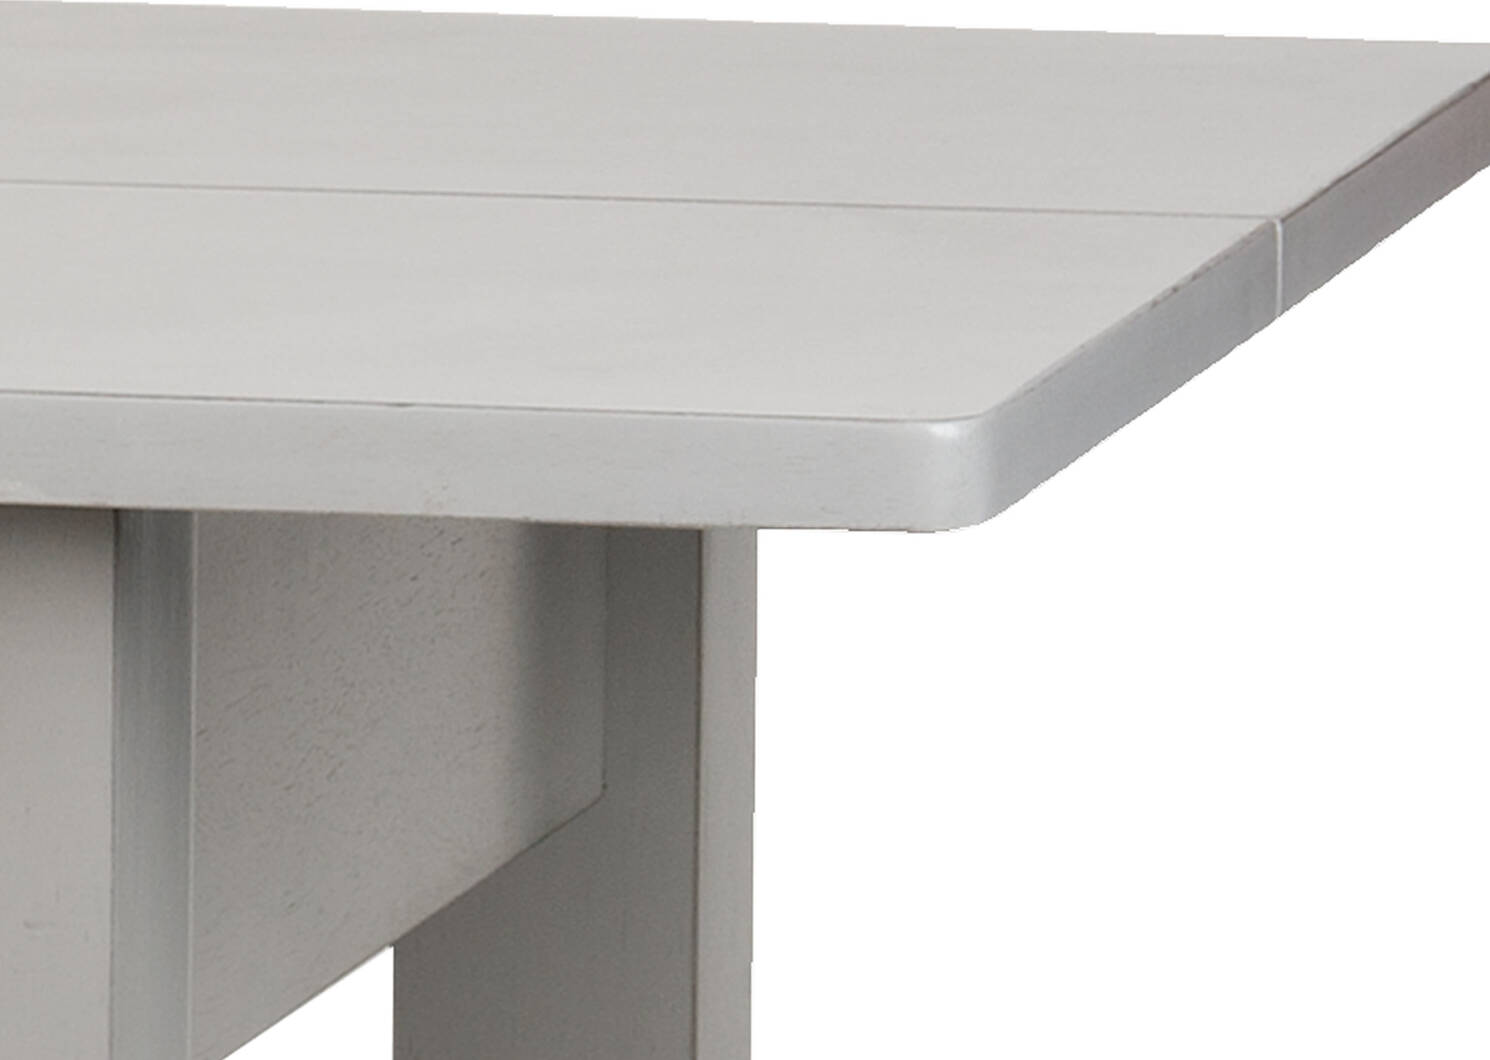 Cantina Ext Counter Table -Prairie Grey